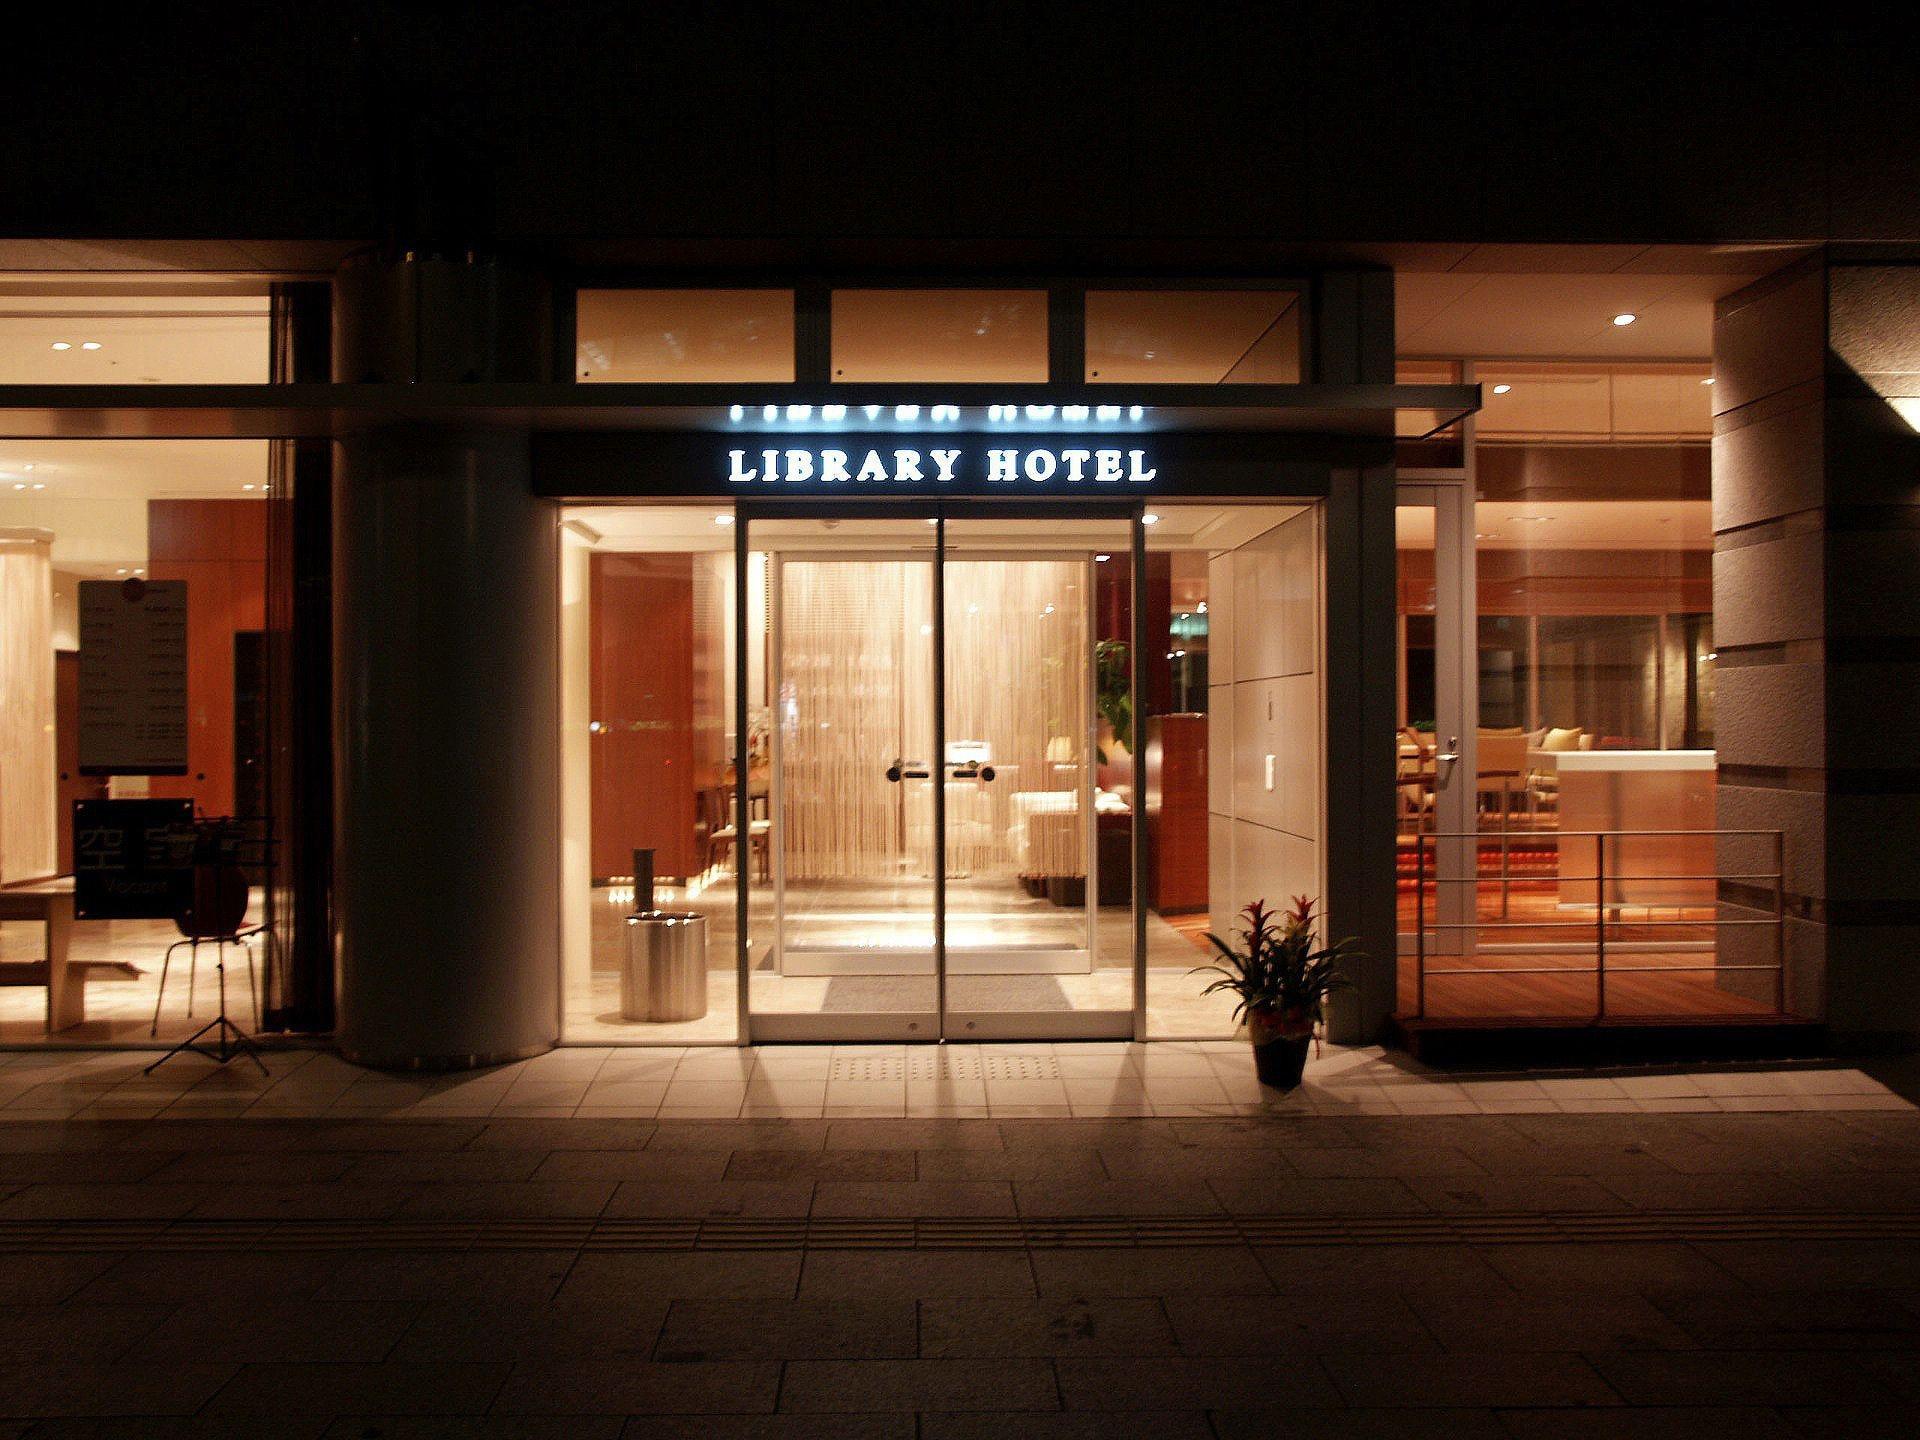 Library Hotel Higashi Nibancho